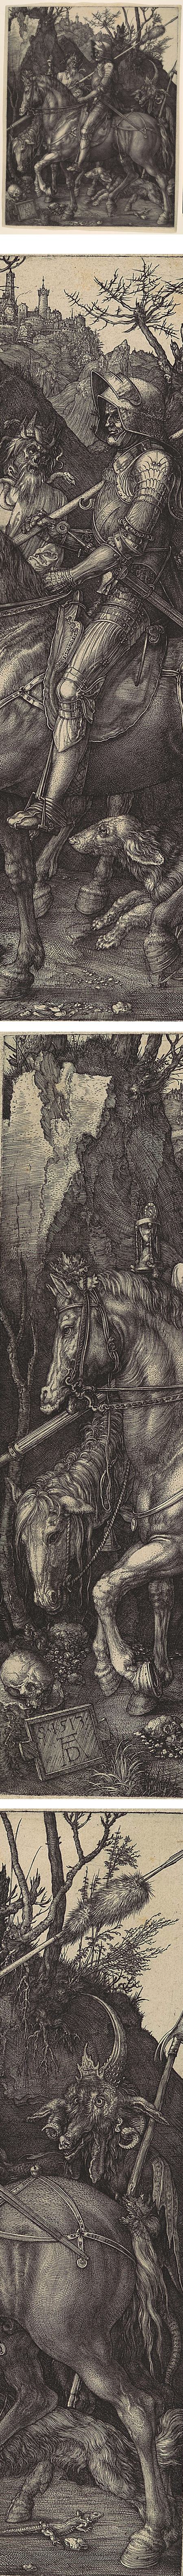 Knight, Death and the Devil, Albrecht Durer, engraving